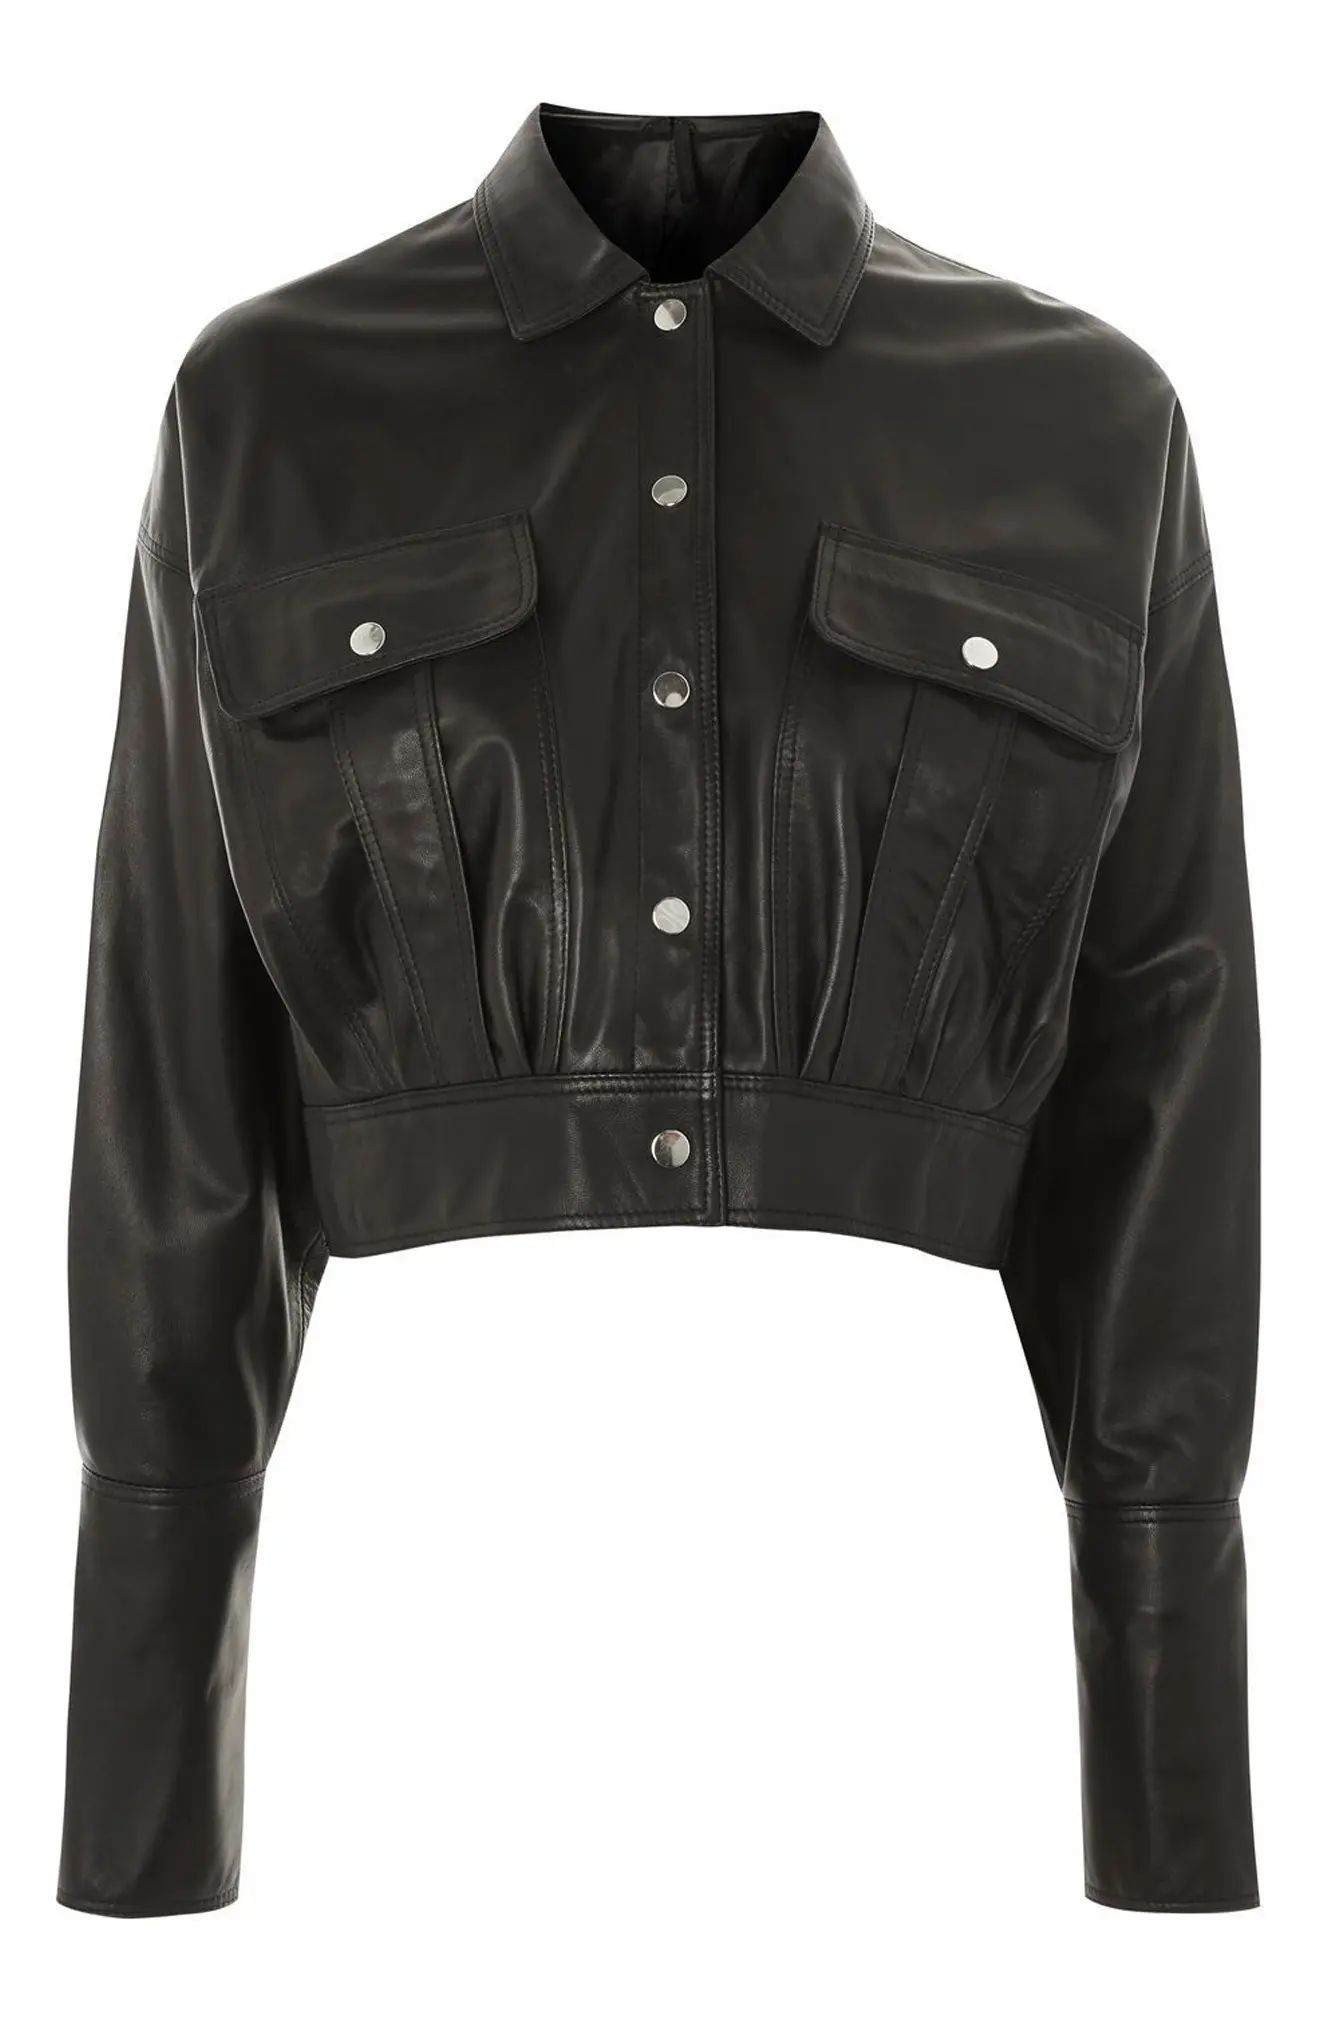 Crop Leather Jacket | Nordstrom